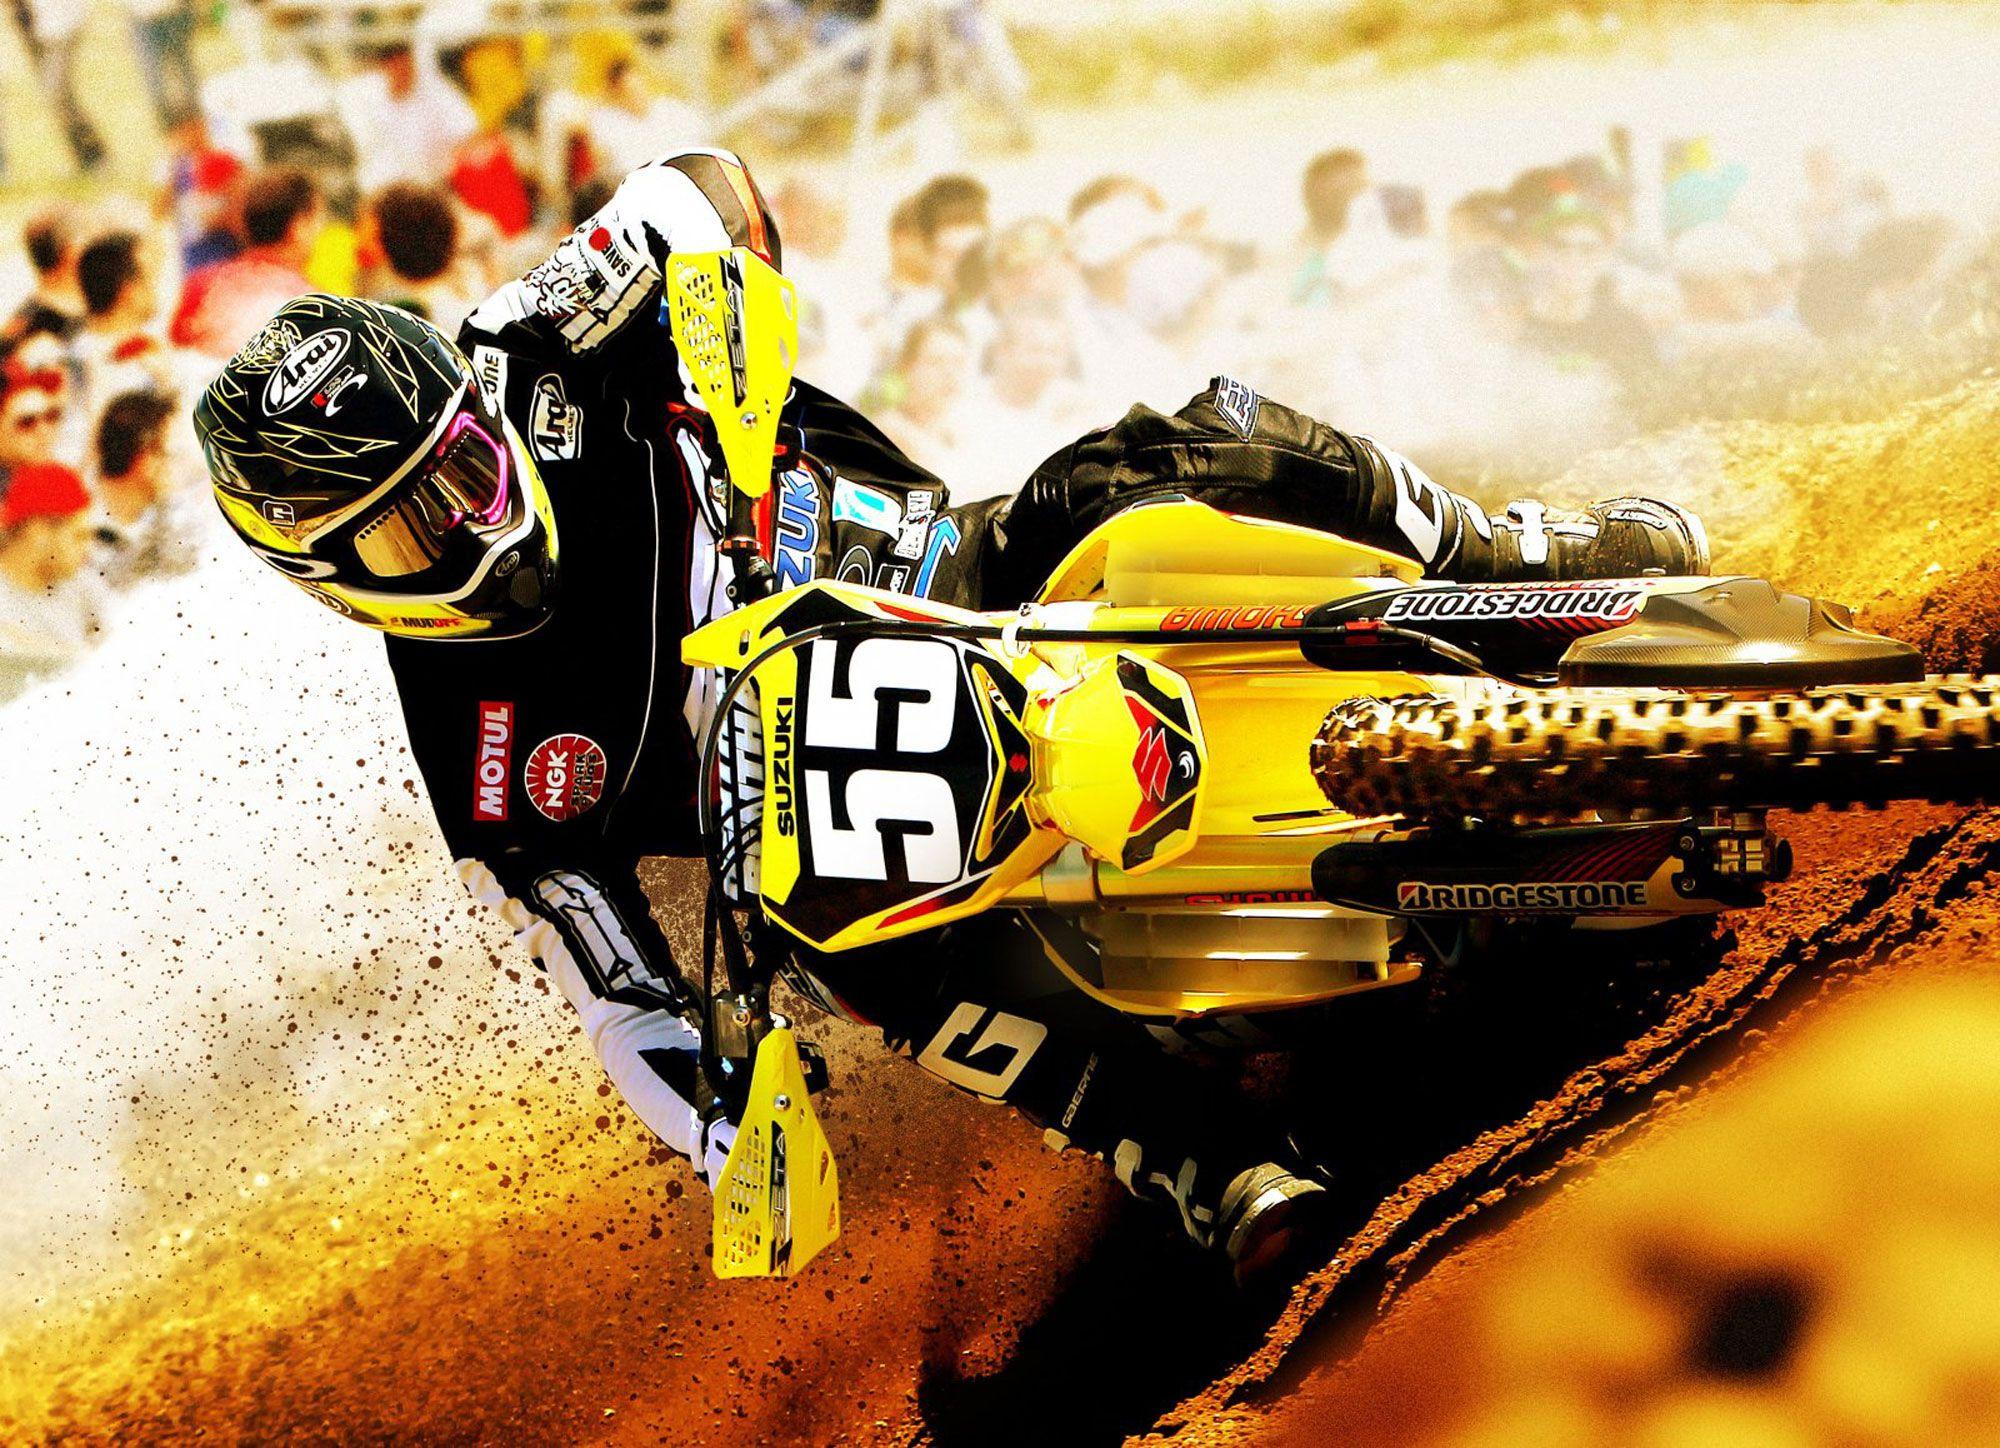 Suzuki Motocross Wallpapers - Top Free Suzuki Motocross Backgrounds ...